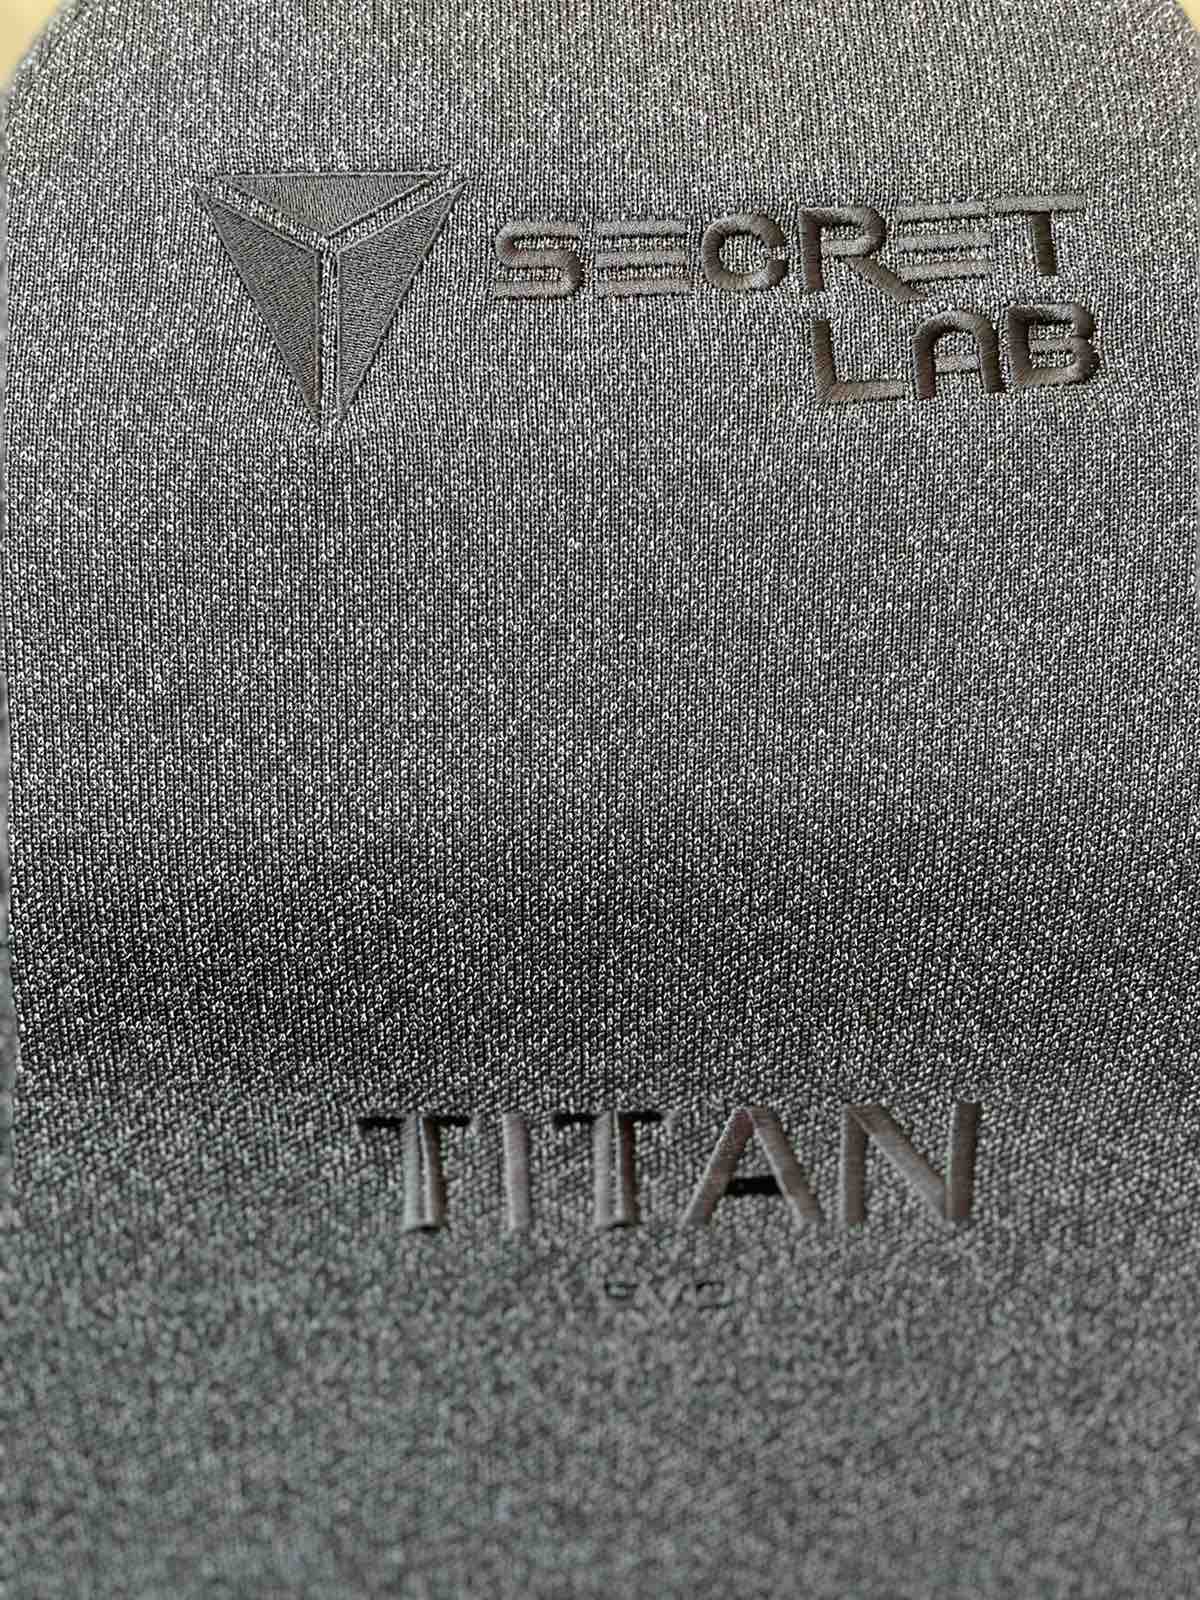 Secretlab Titan Evo 2022 Fabric and Branding | CyberCrew